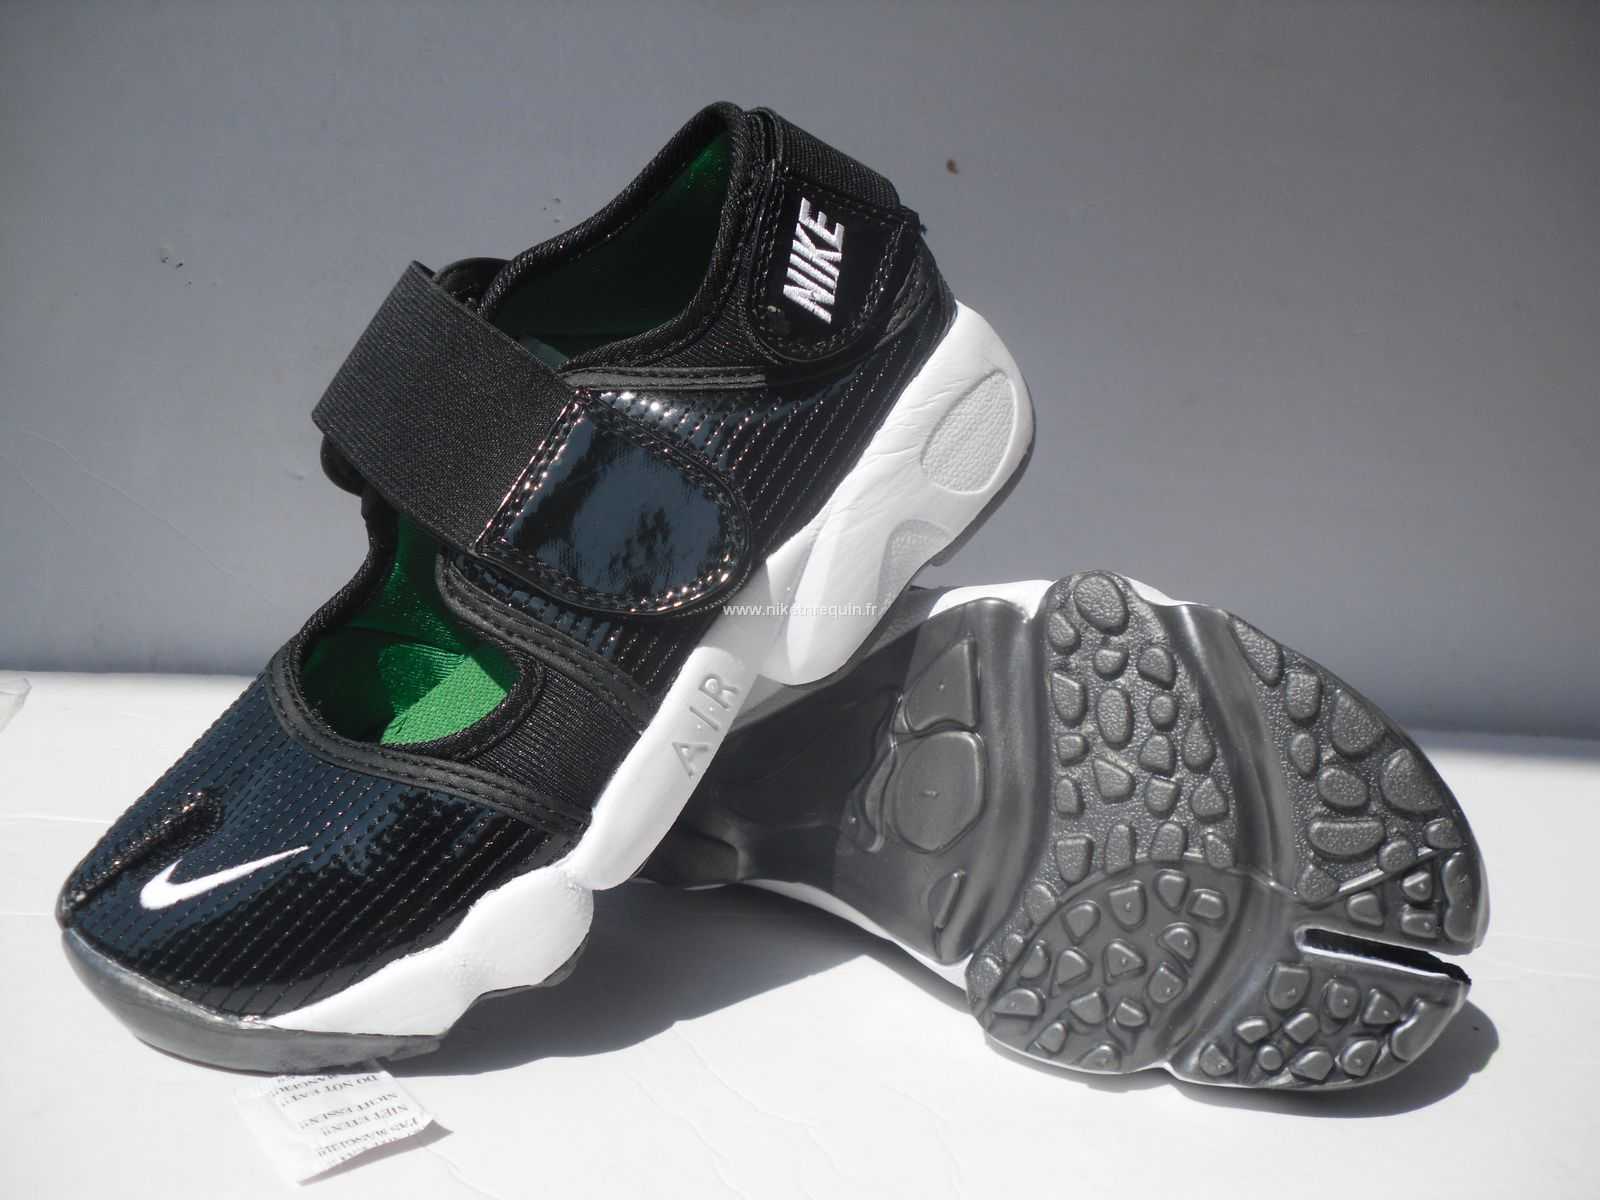 Nouveau Modele De Beaty Chaussures Nike Rift Shox Noir